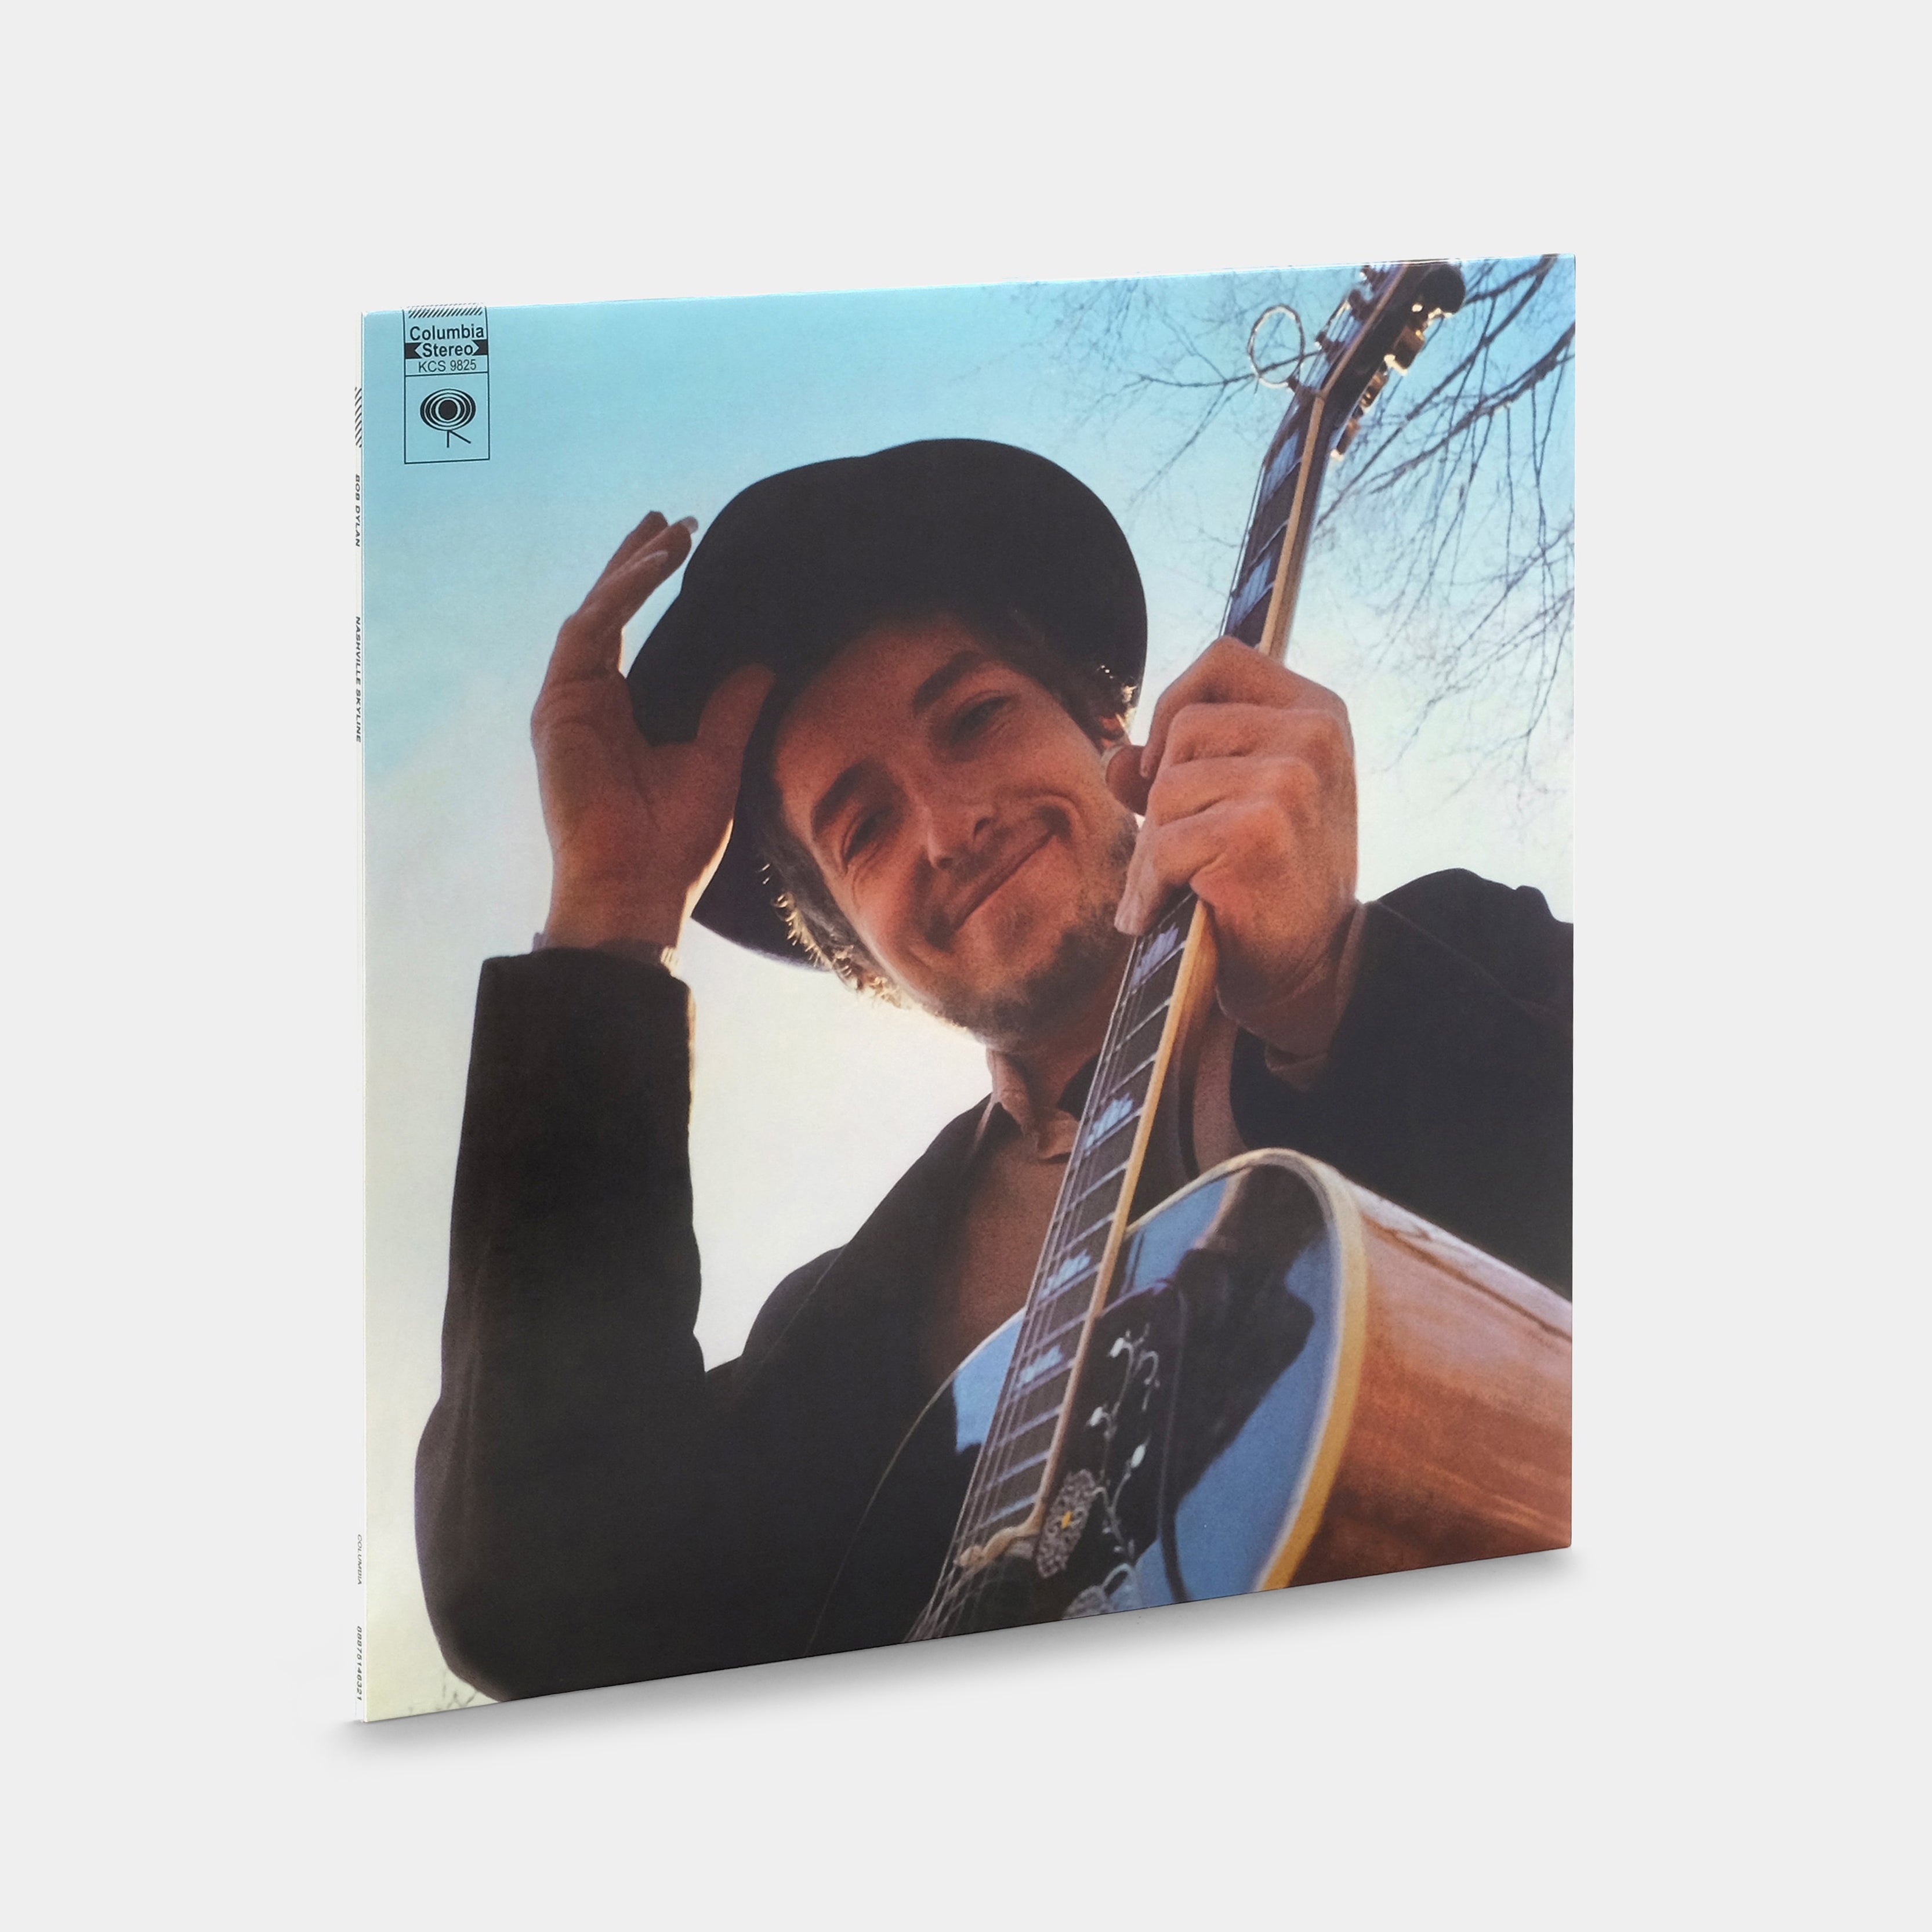 Bob Dylan - Nashville Skyline LP White Vinyl Record